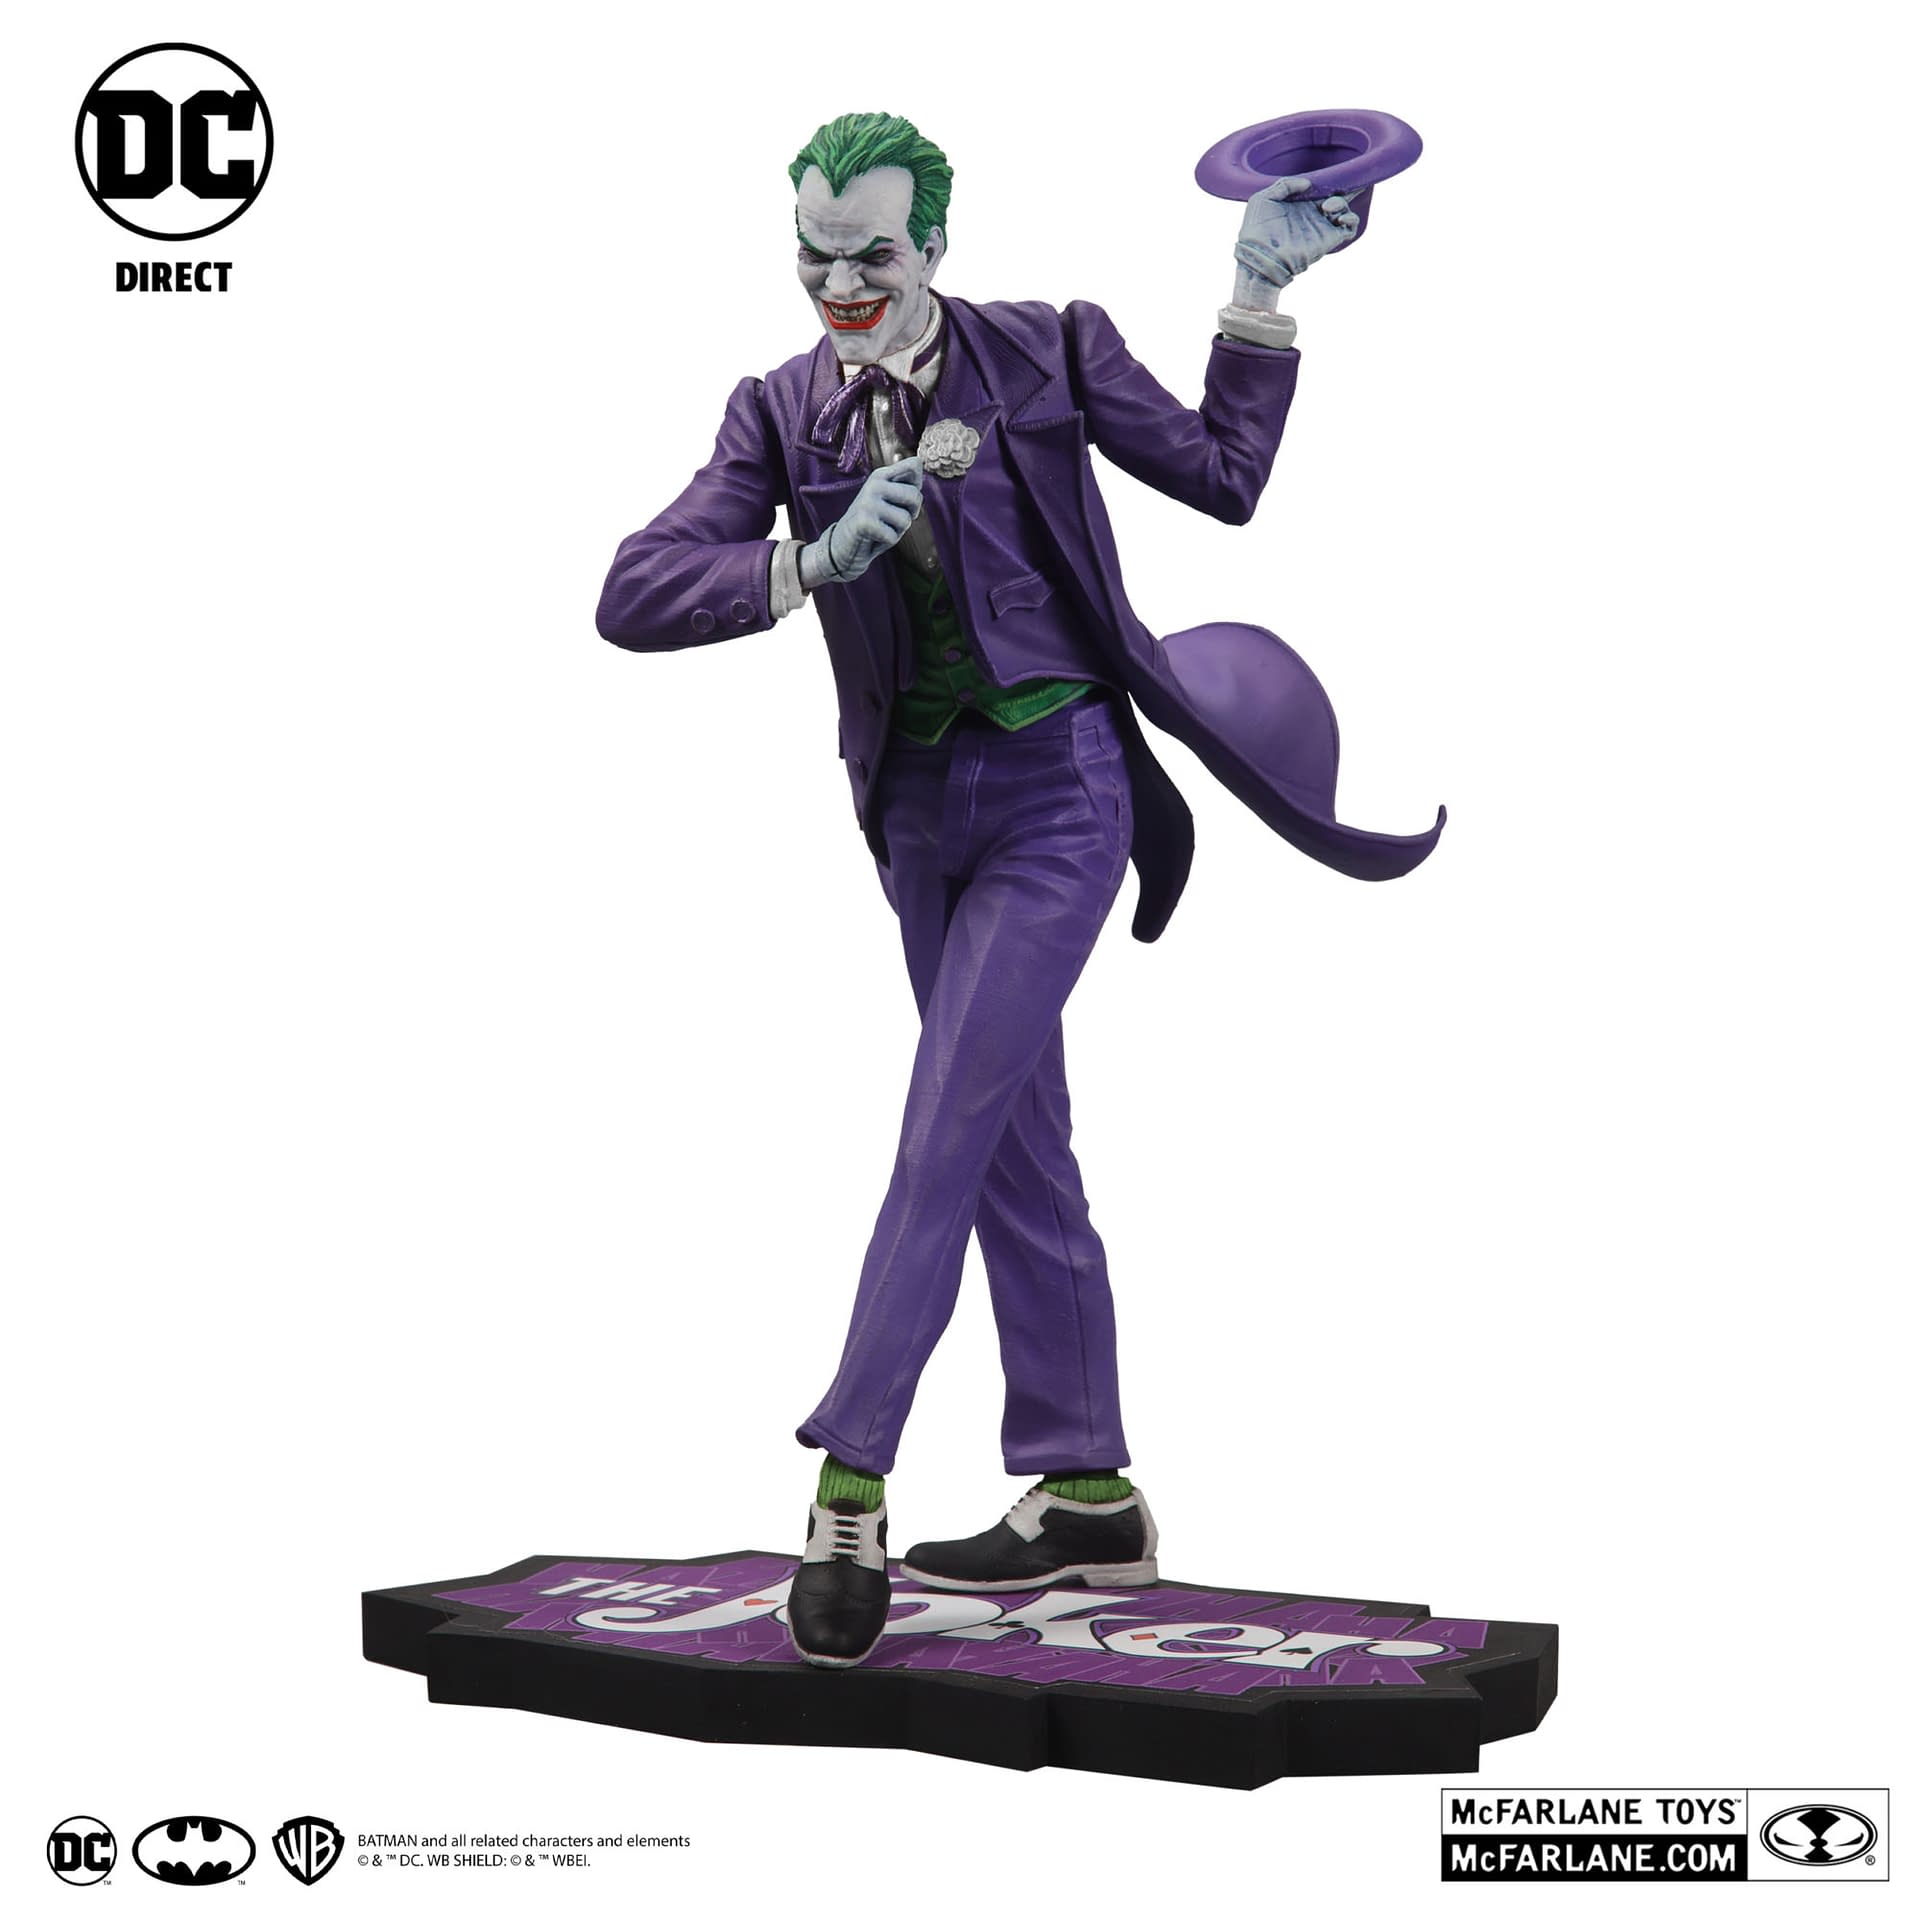 McFarlane Toys Debuts New Alex Ross The Joker Purple Craze Statue0